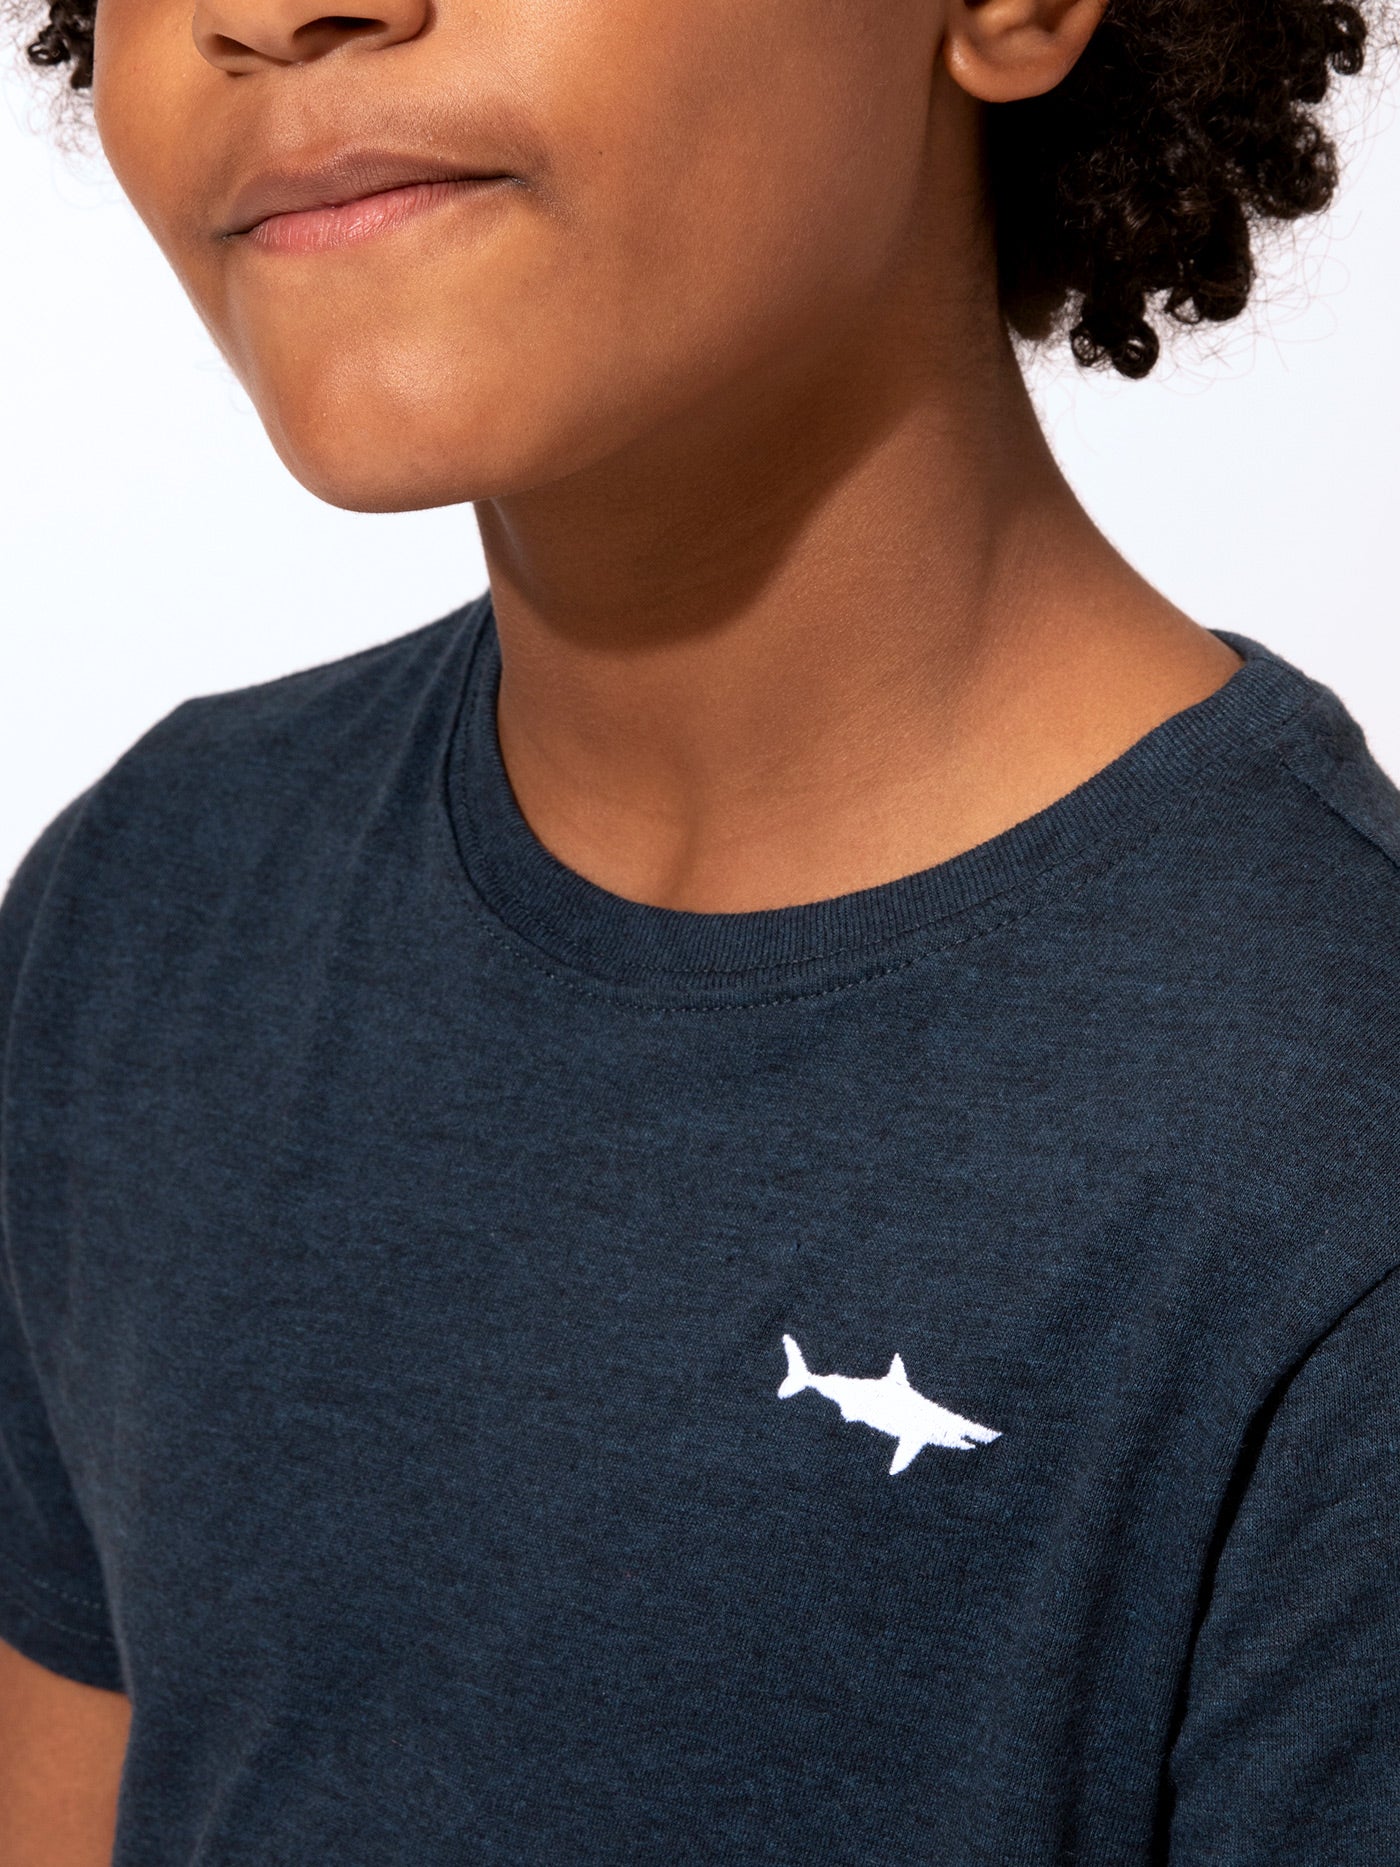 Boys Shark Embroidered Tee Boys Tops Tshirt Threads 4 Thought 